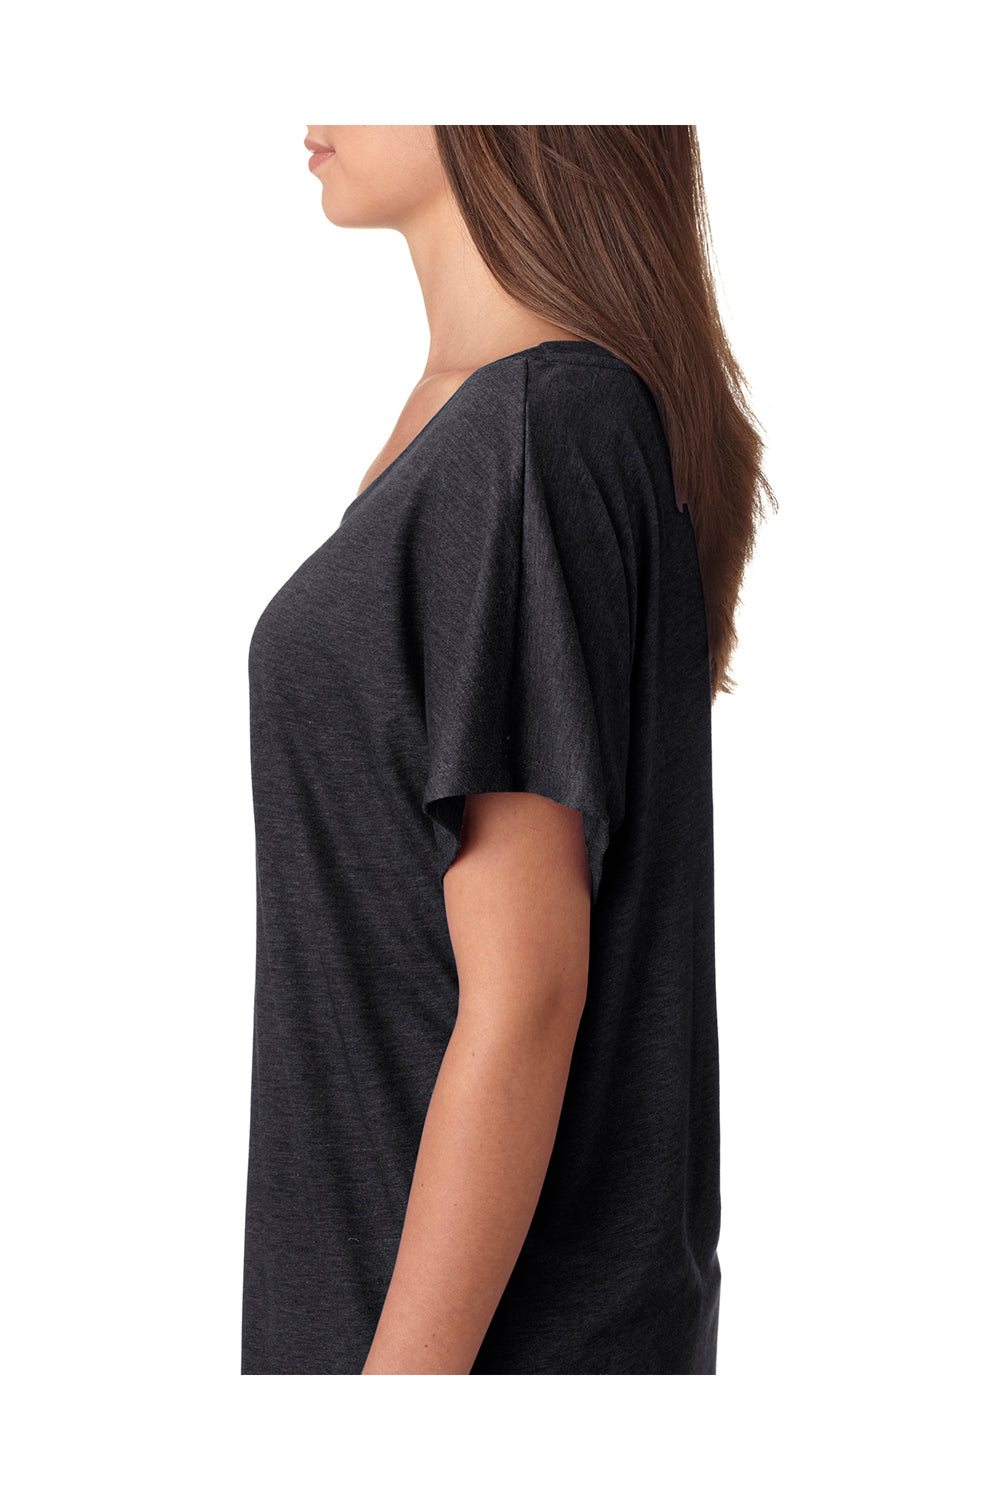 Next Level 6760 Womens Dolman Jersey Short Sleeve Scoop Neck T-Shirt Black Side